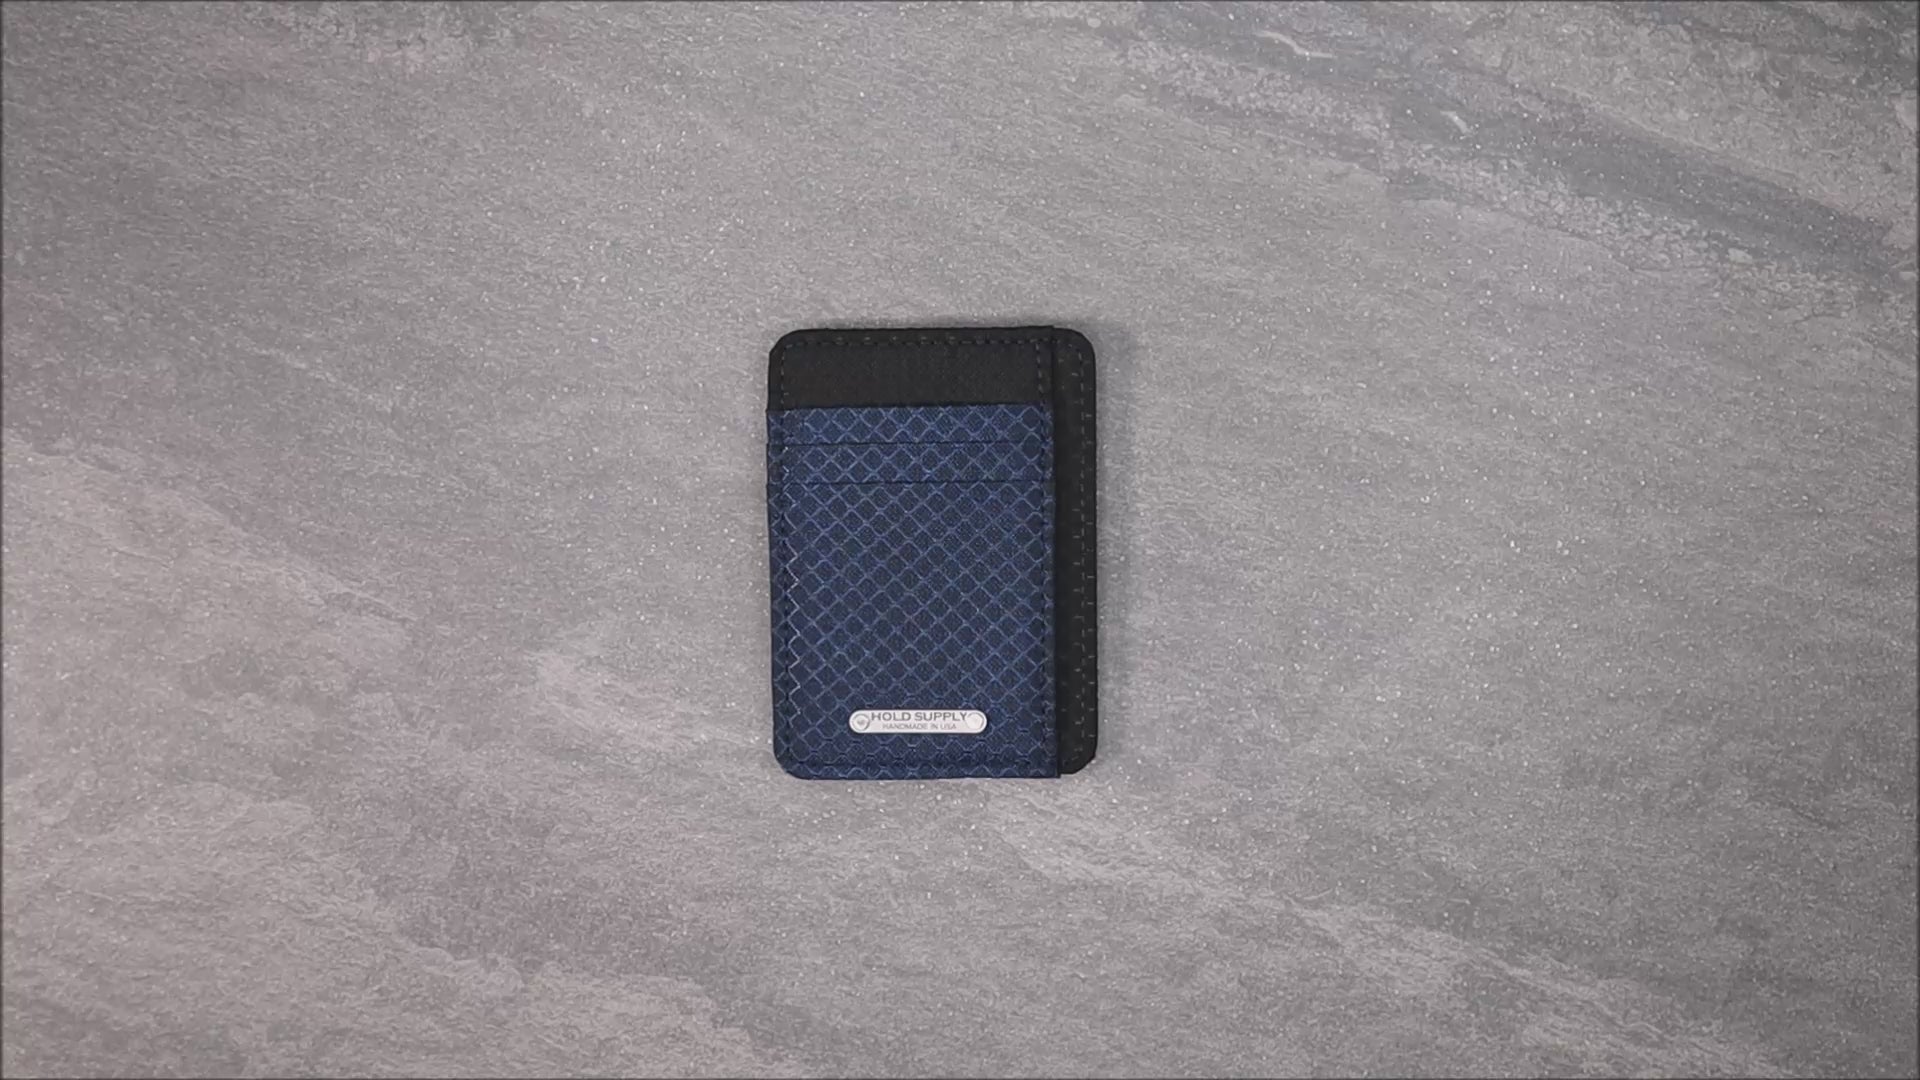 Navy Blue & Black Ripstop Front Pocket Wallet